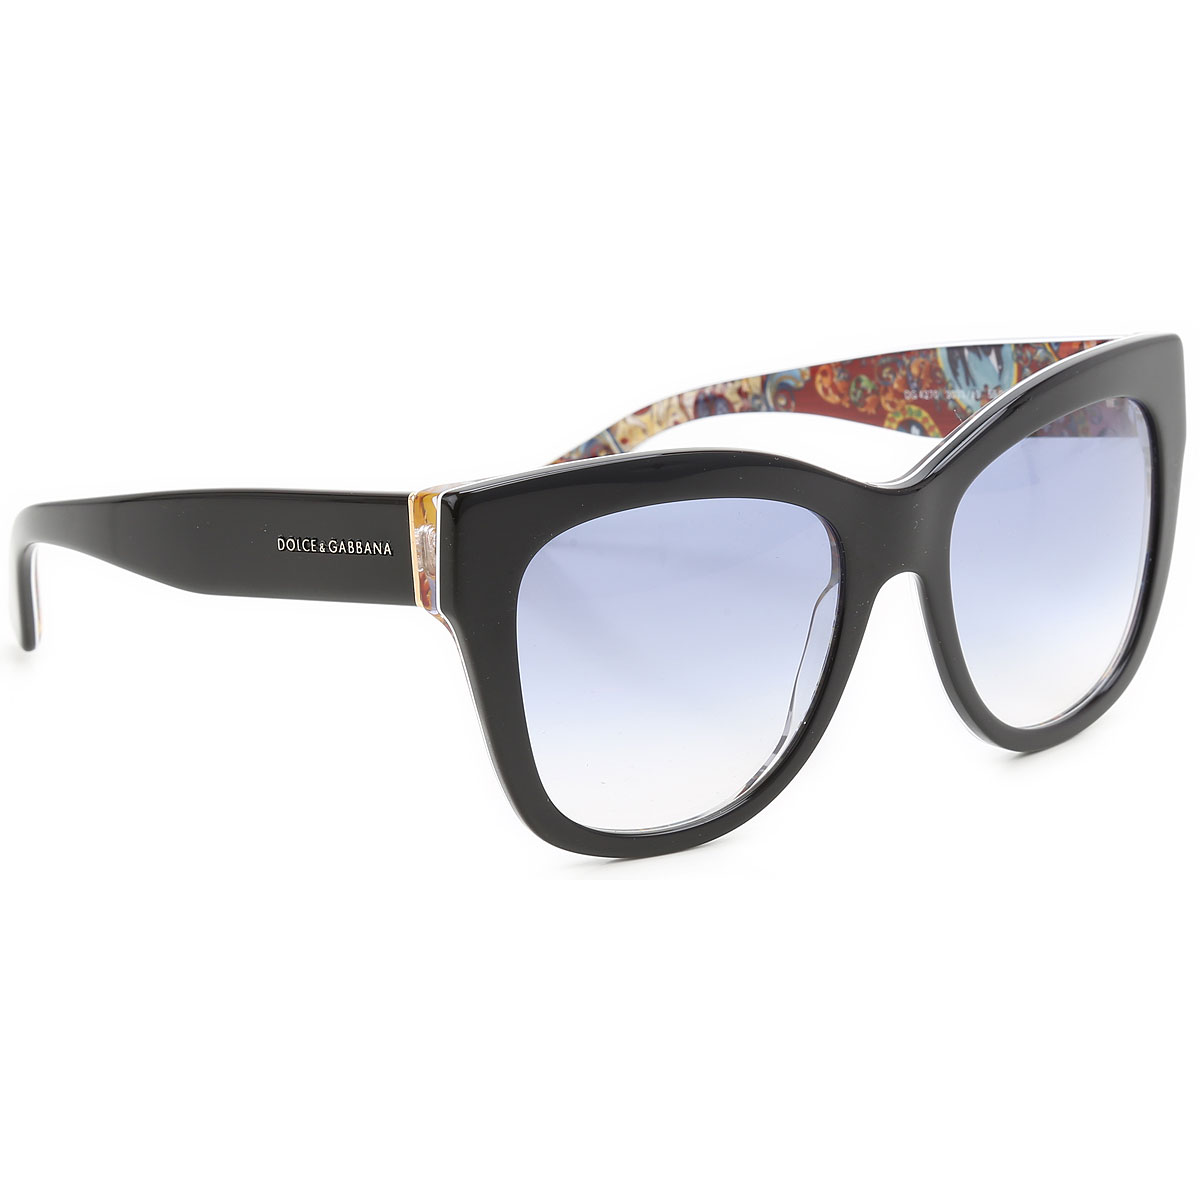 Sunglasses Dolce & Gabbana, Style code: dg4270-3033-19